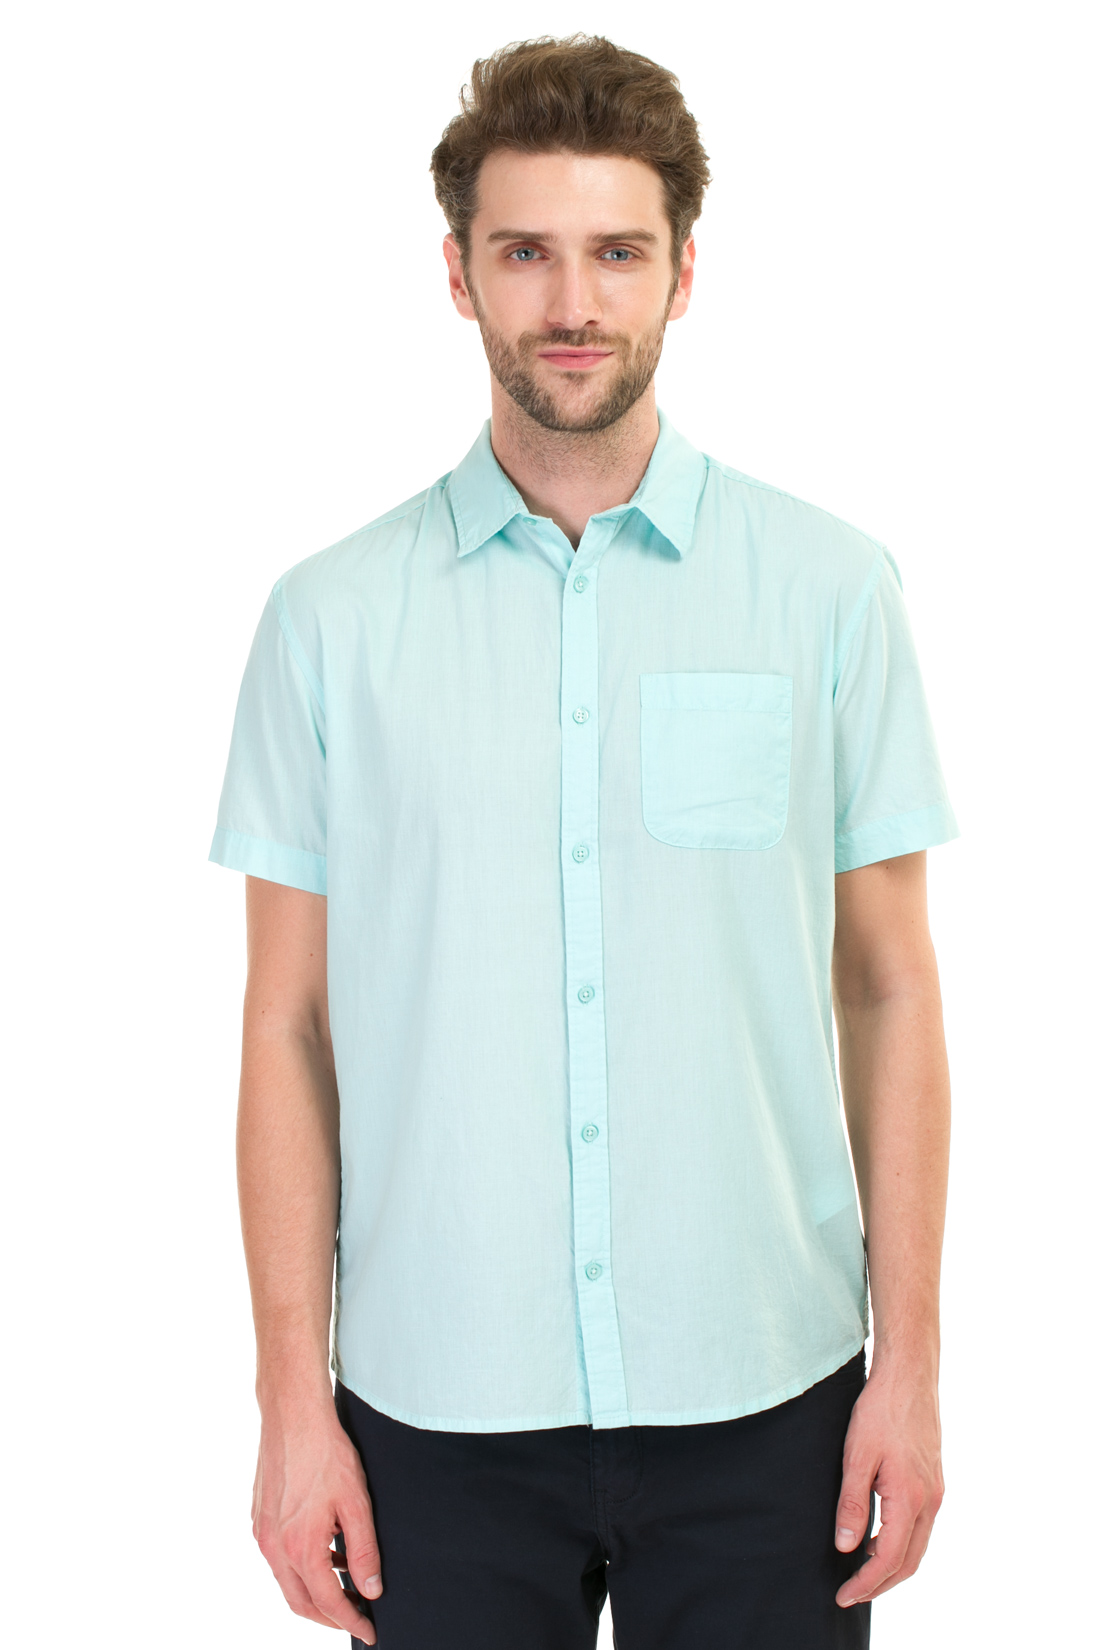 Базовая рубашка с коротким рукавом (арт. baon B687025), размер M, цвет голубой Базовая рубашка с коротким рукавом (арт. baon B687025) - фото 1